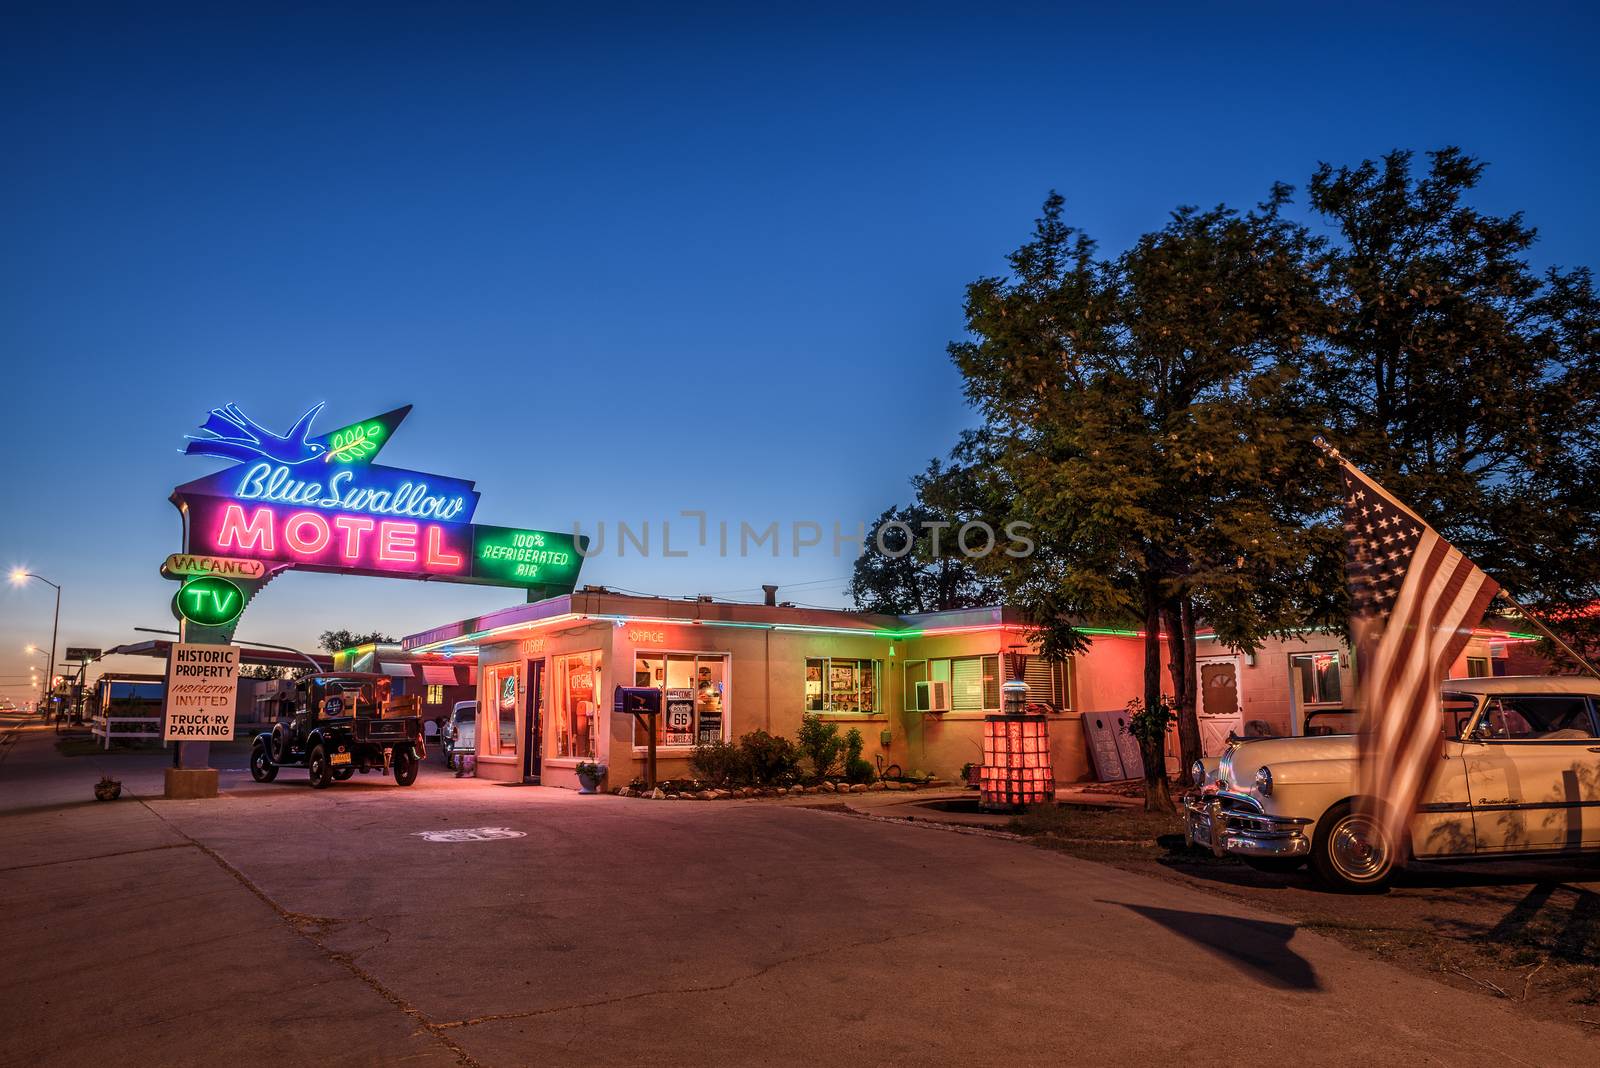 Historic Blue Swallow Motel in Tucumcari, New Mexico by nickfox